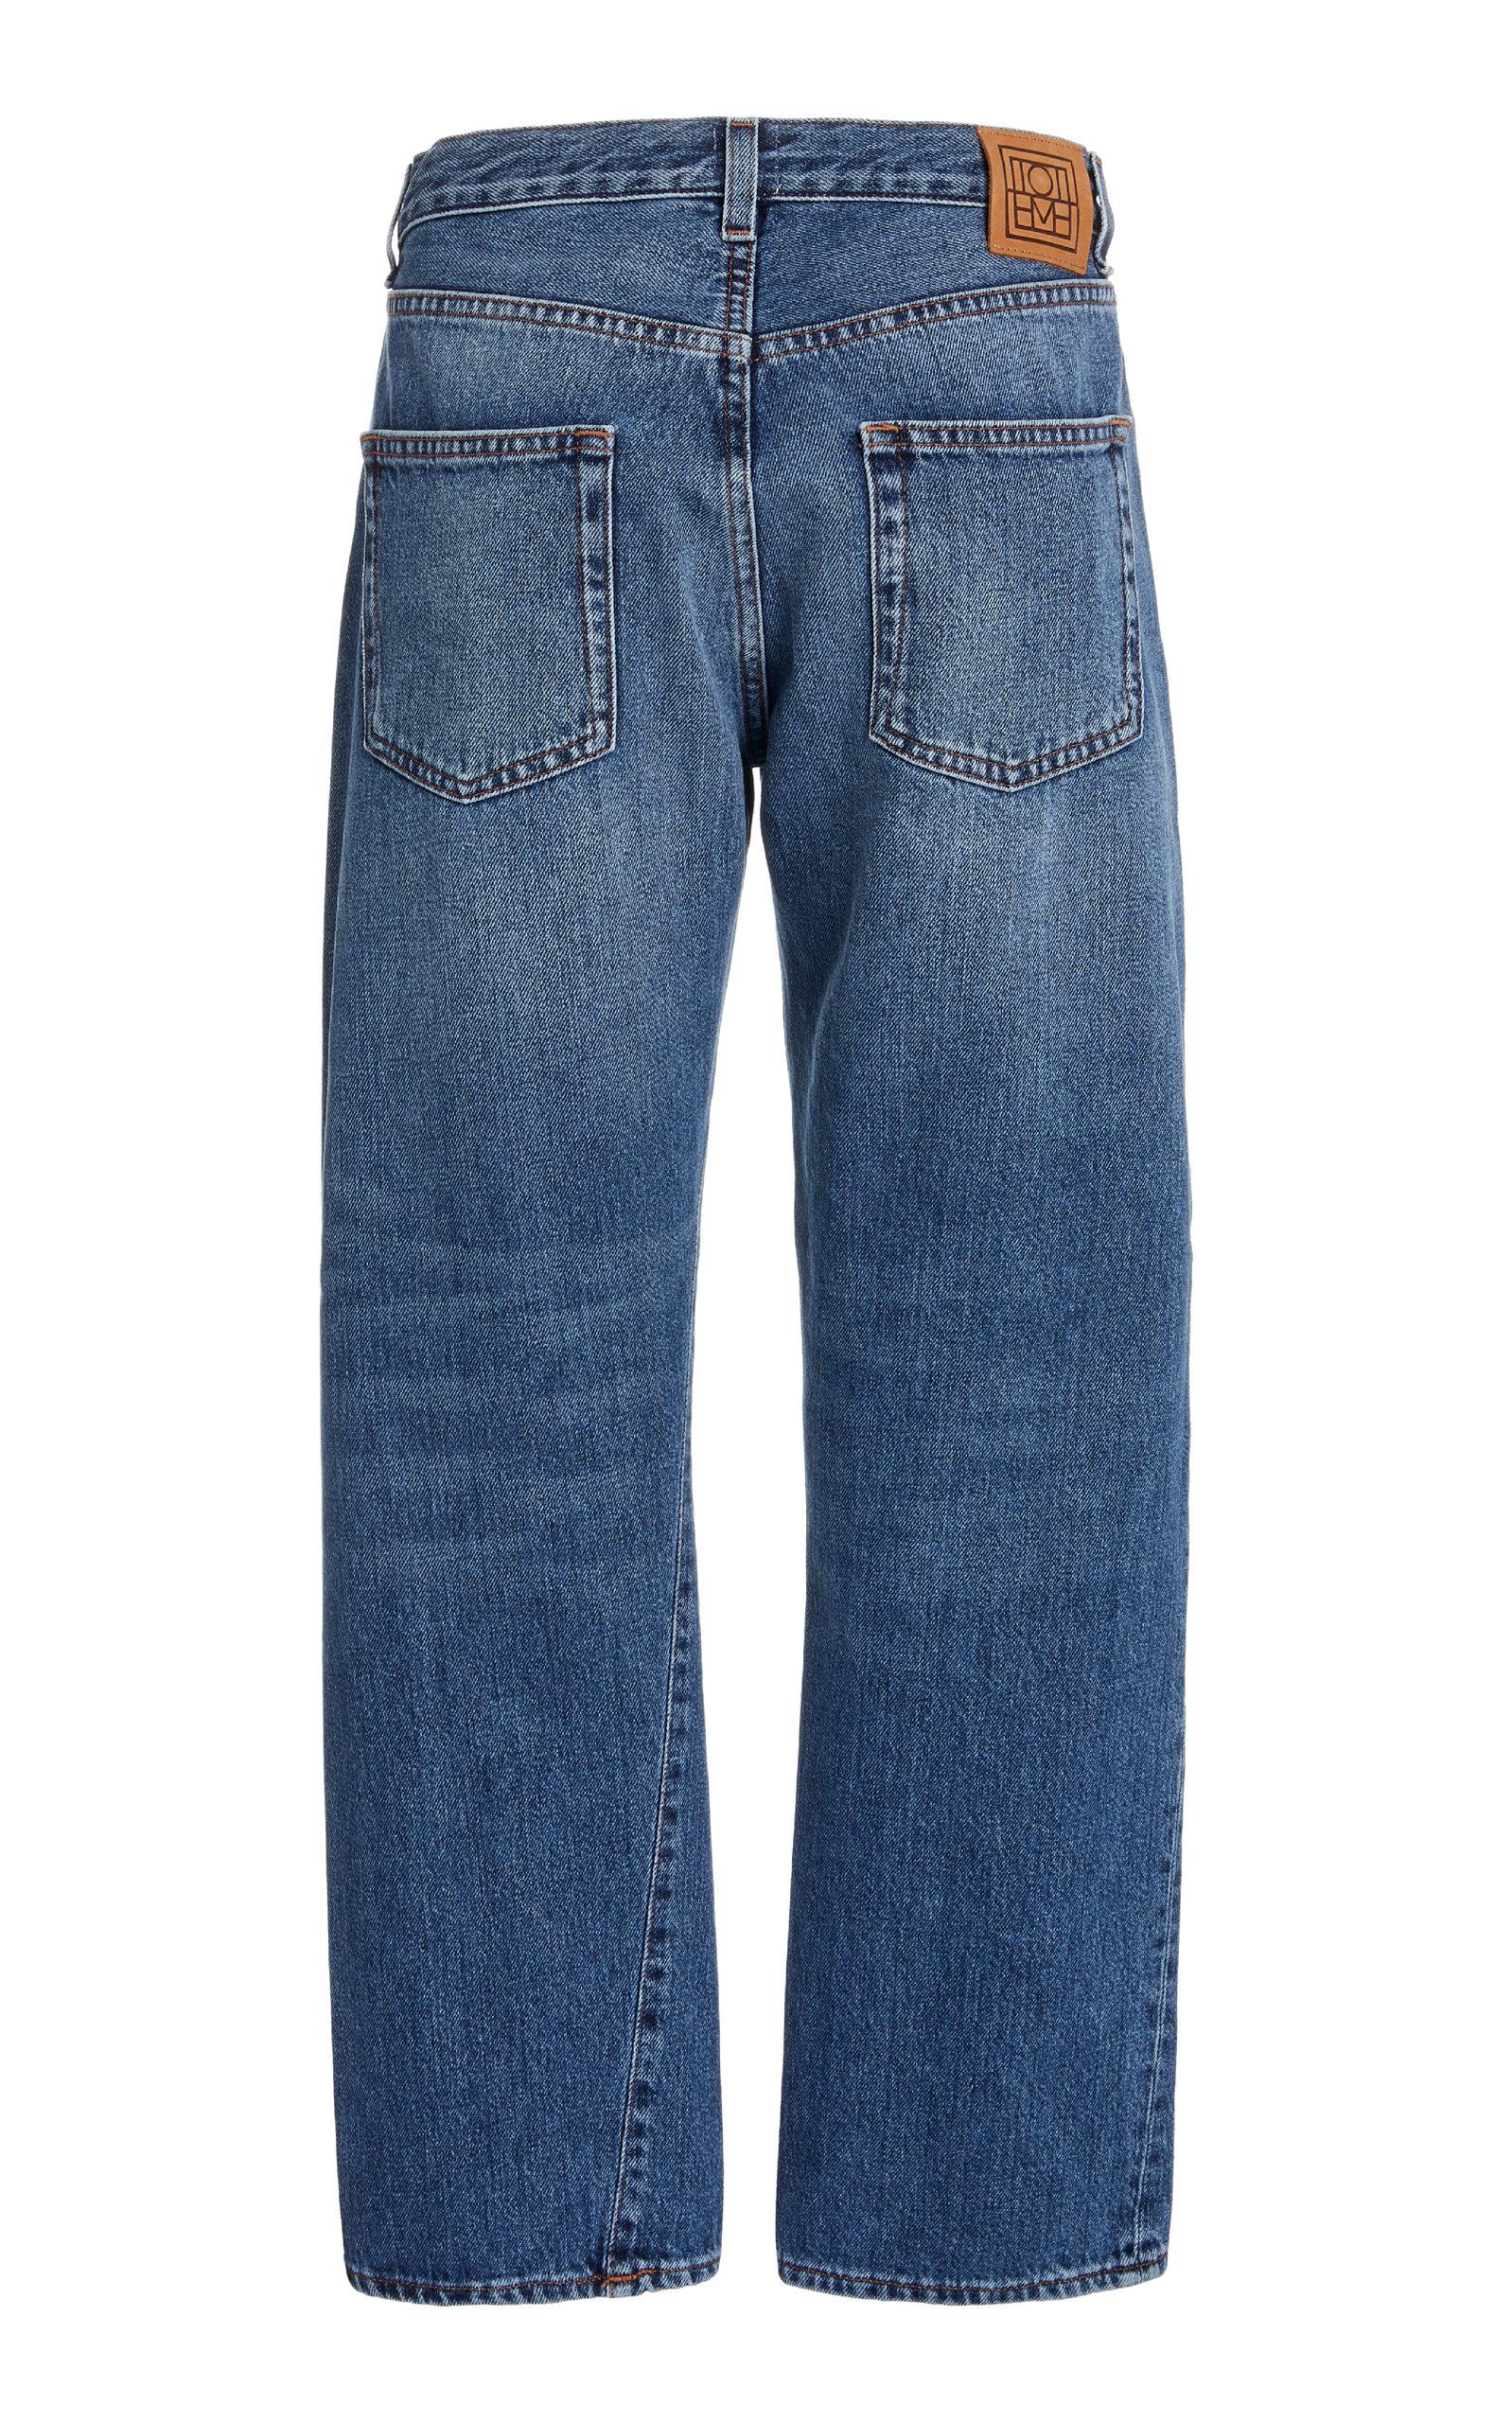 Totême Denim Original Rigid Mid-rise Straight-leg Jeans in Blue - Lyst